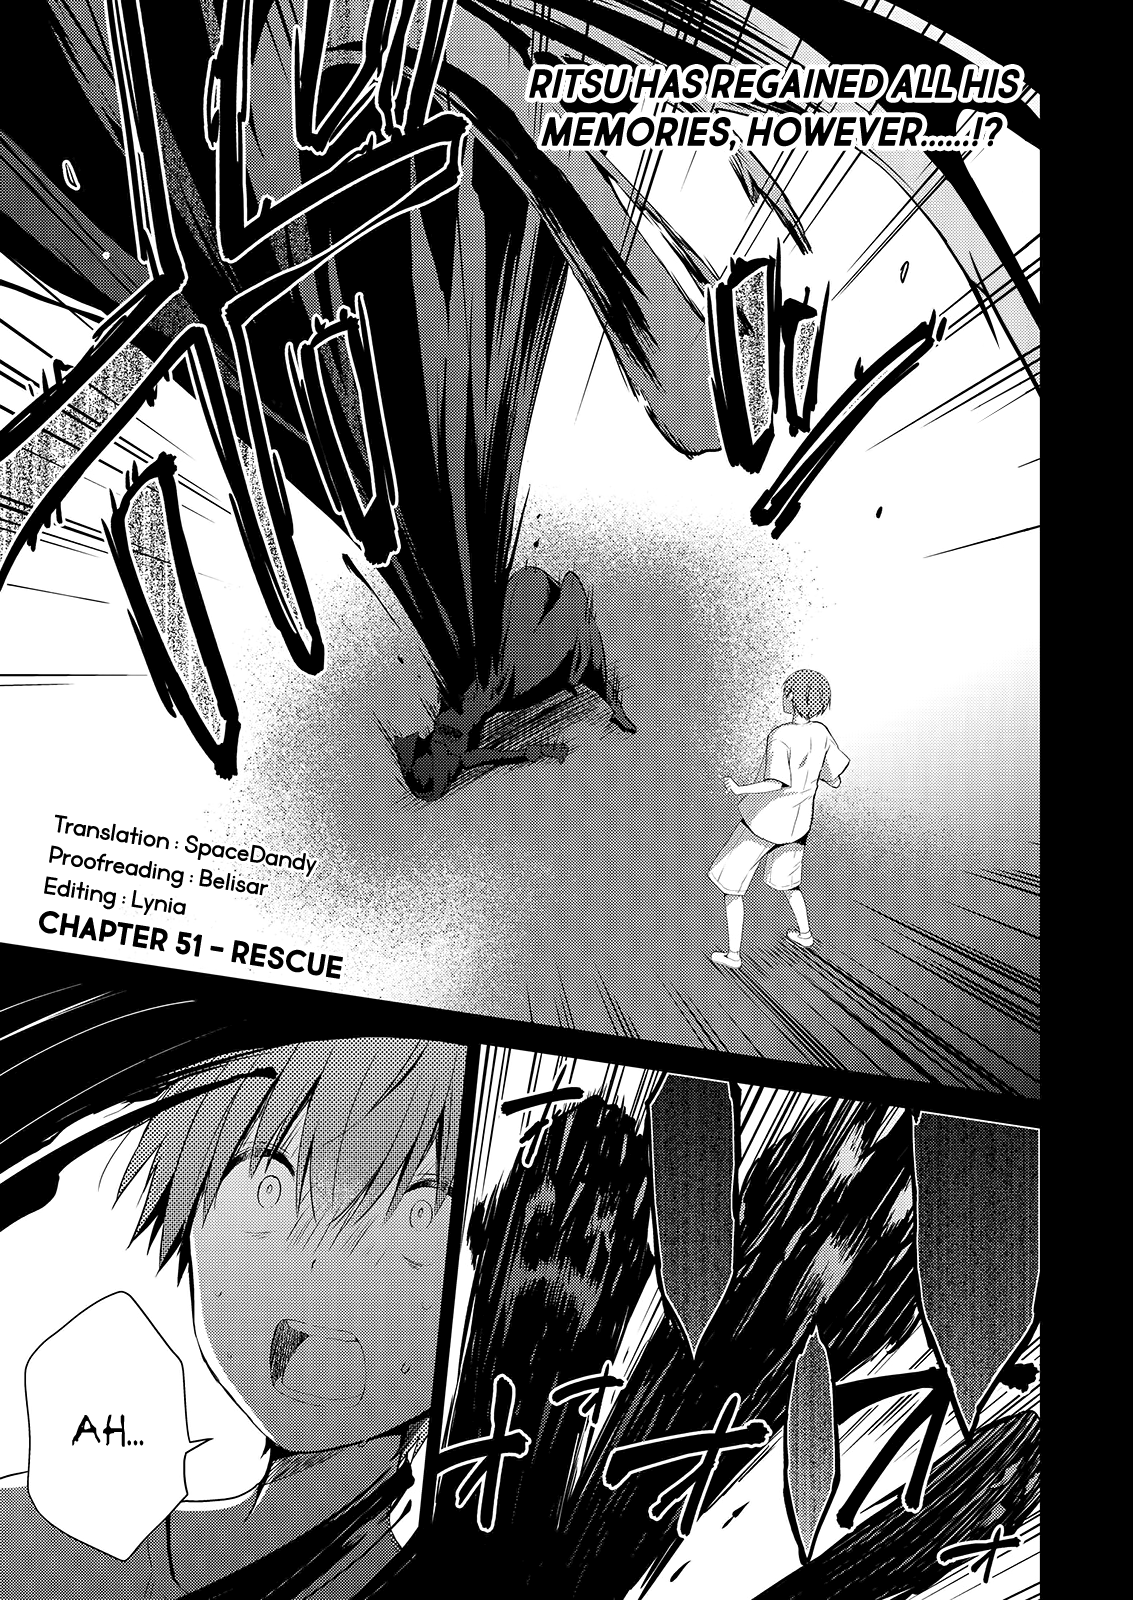 Asmodeus Wa Akiramenai - Page 1